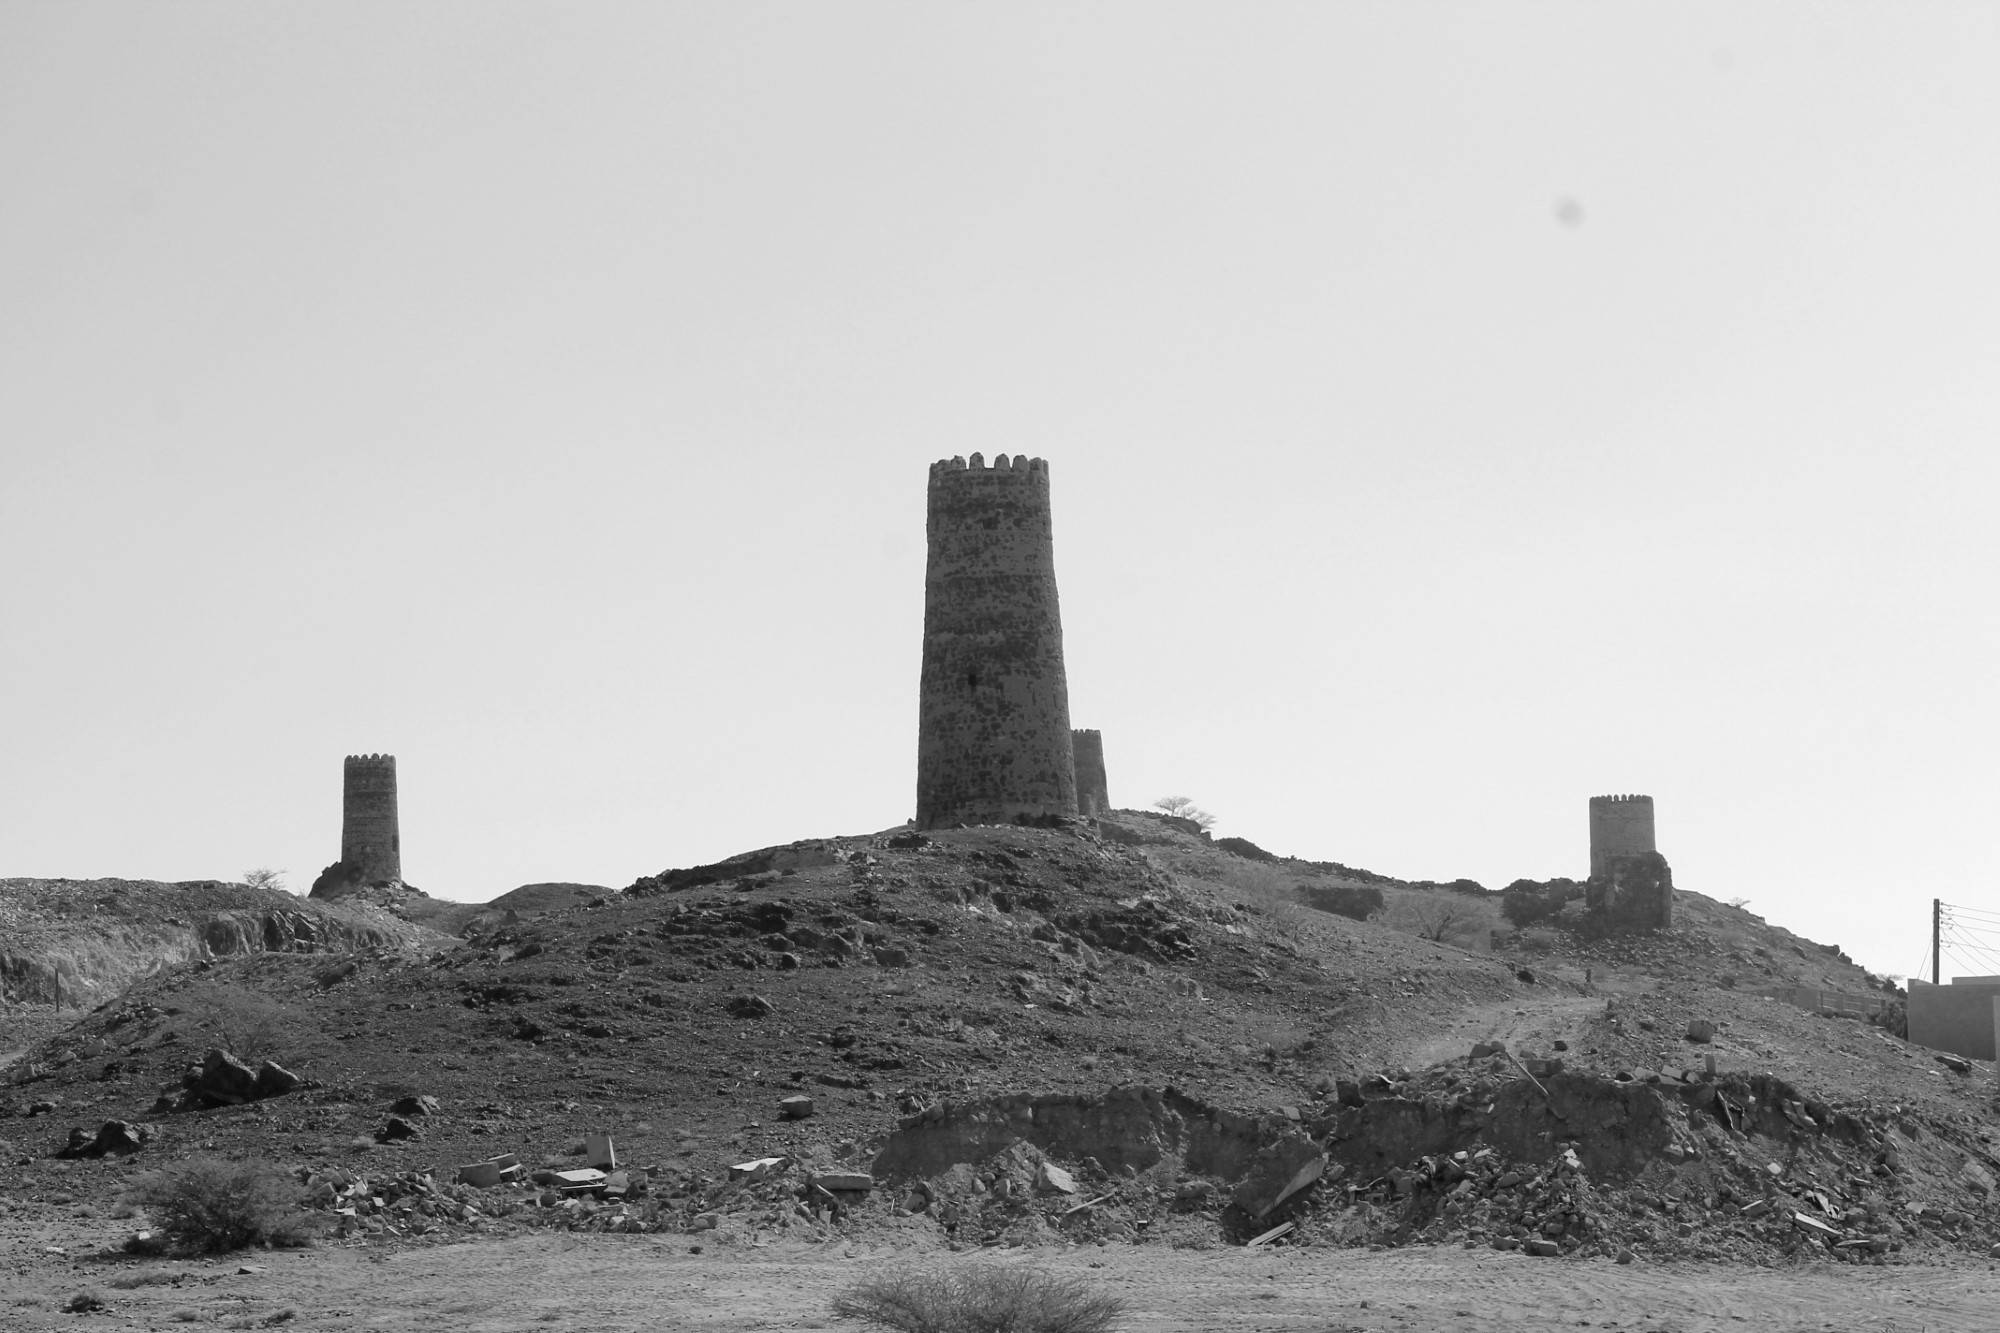 Panoramic view of the towers of Al-Mudayrib